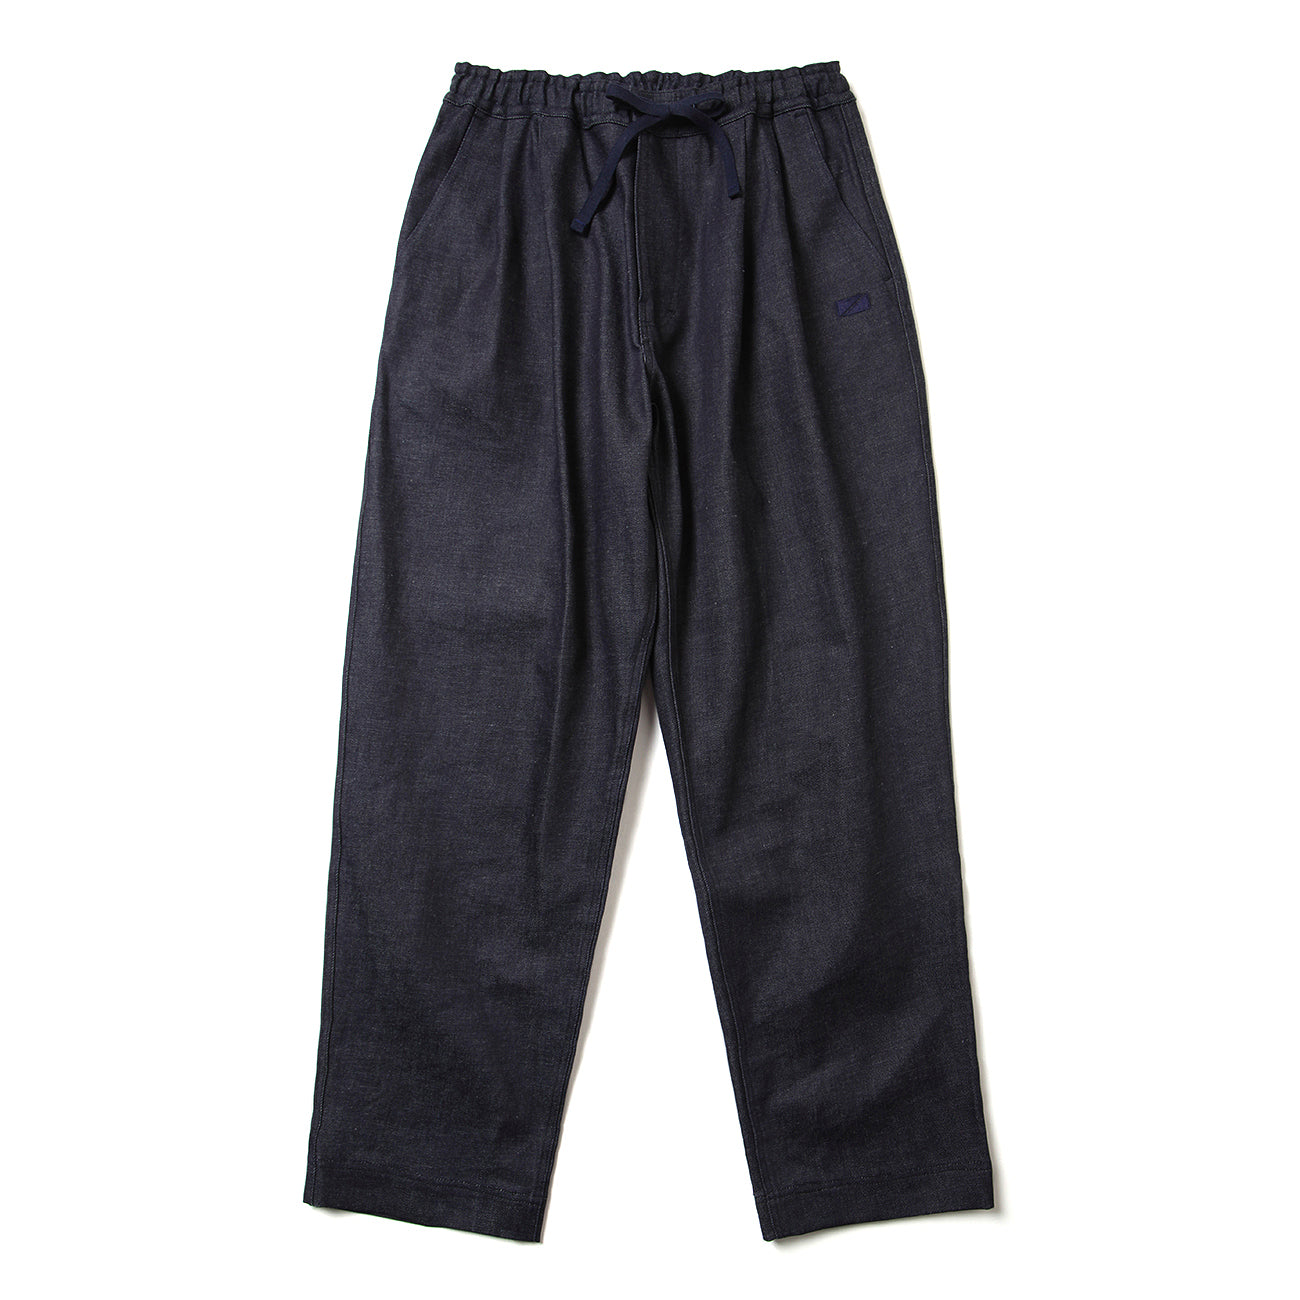 KED PANTS (CORDUROY) - BLACK | Short pants every day